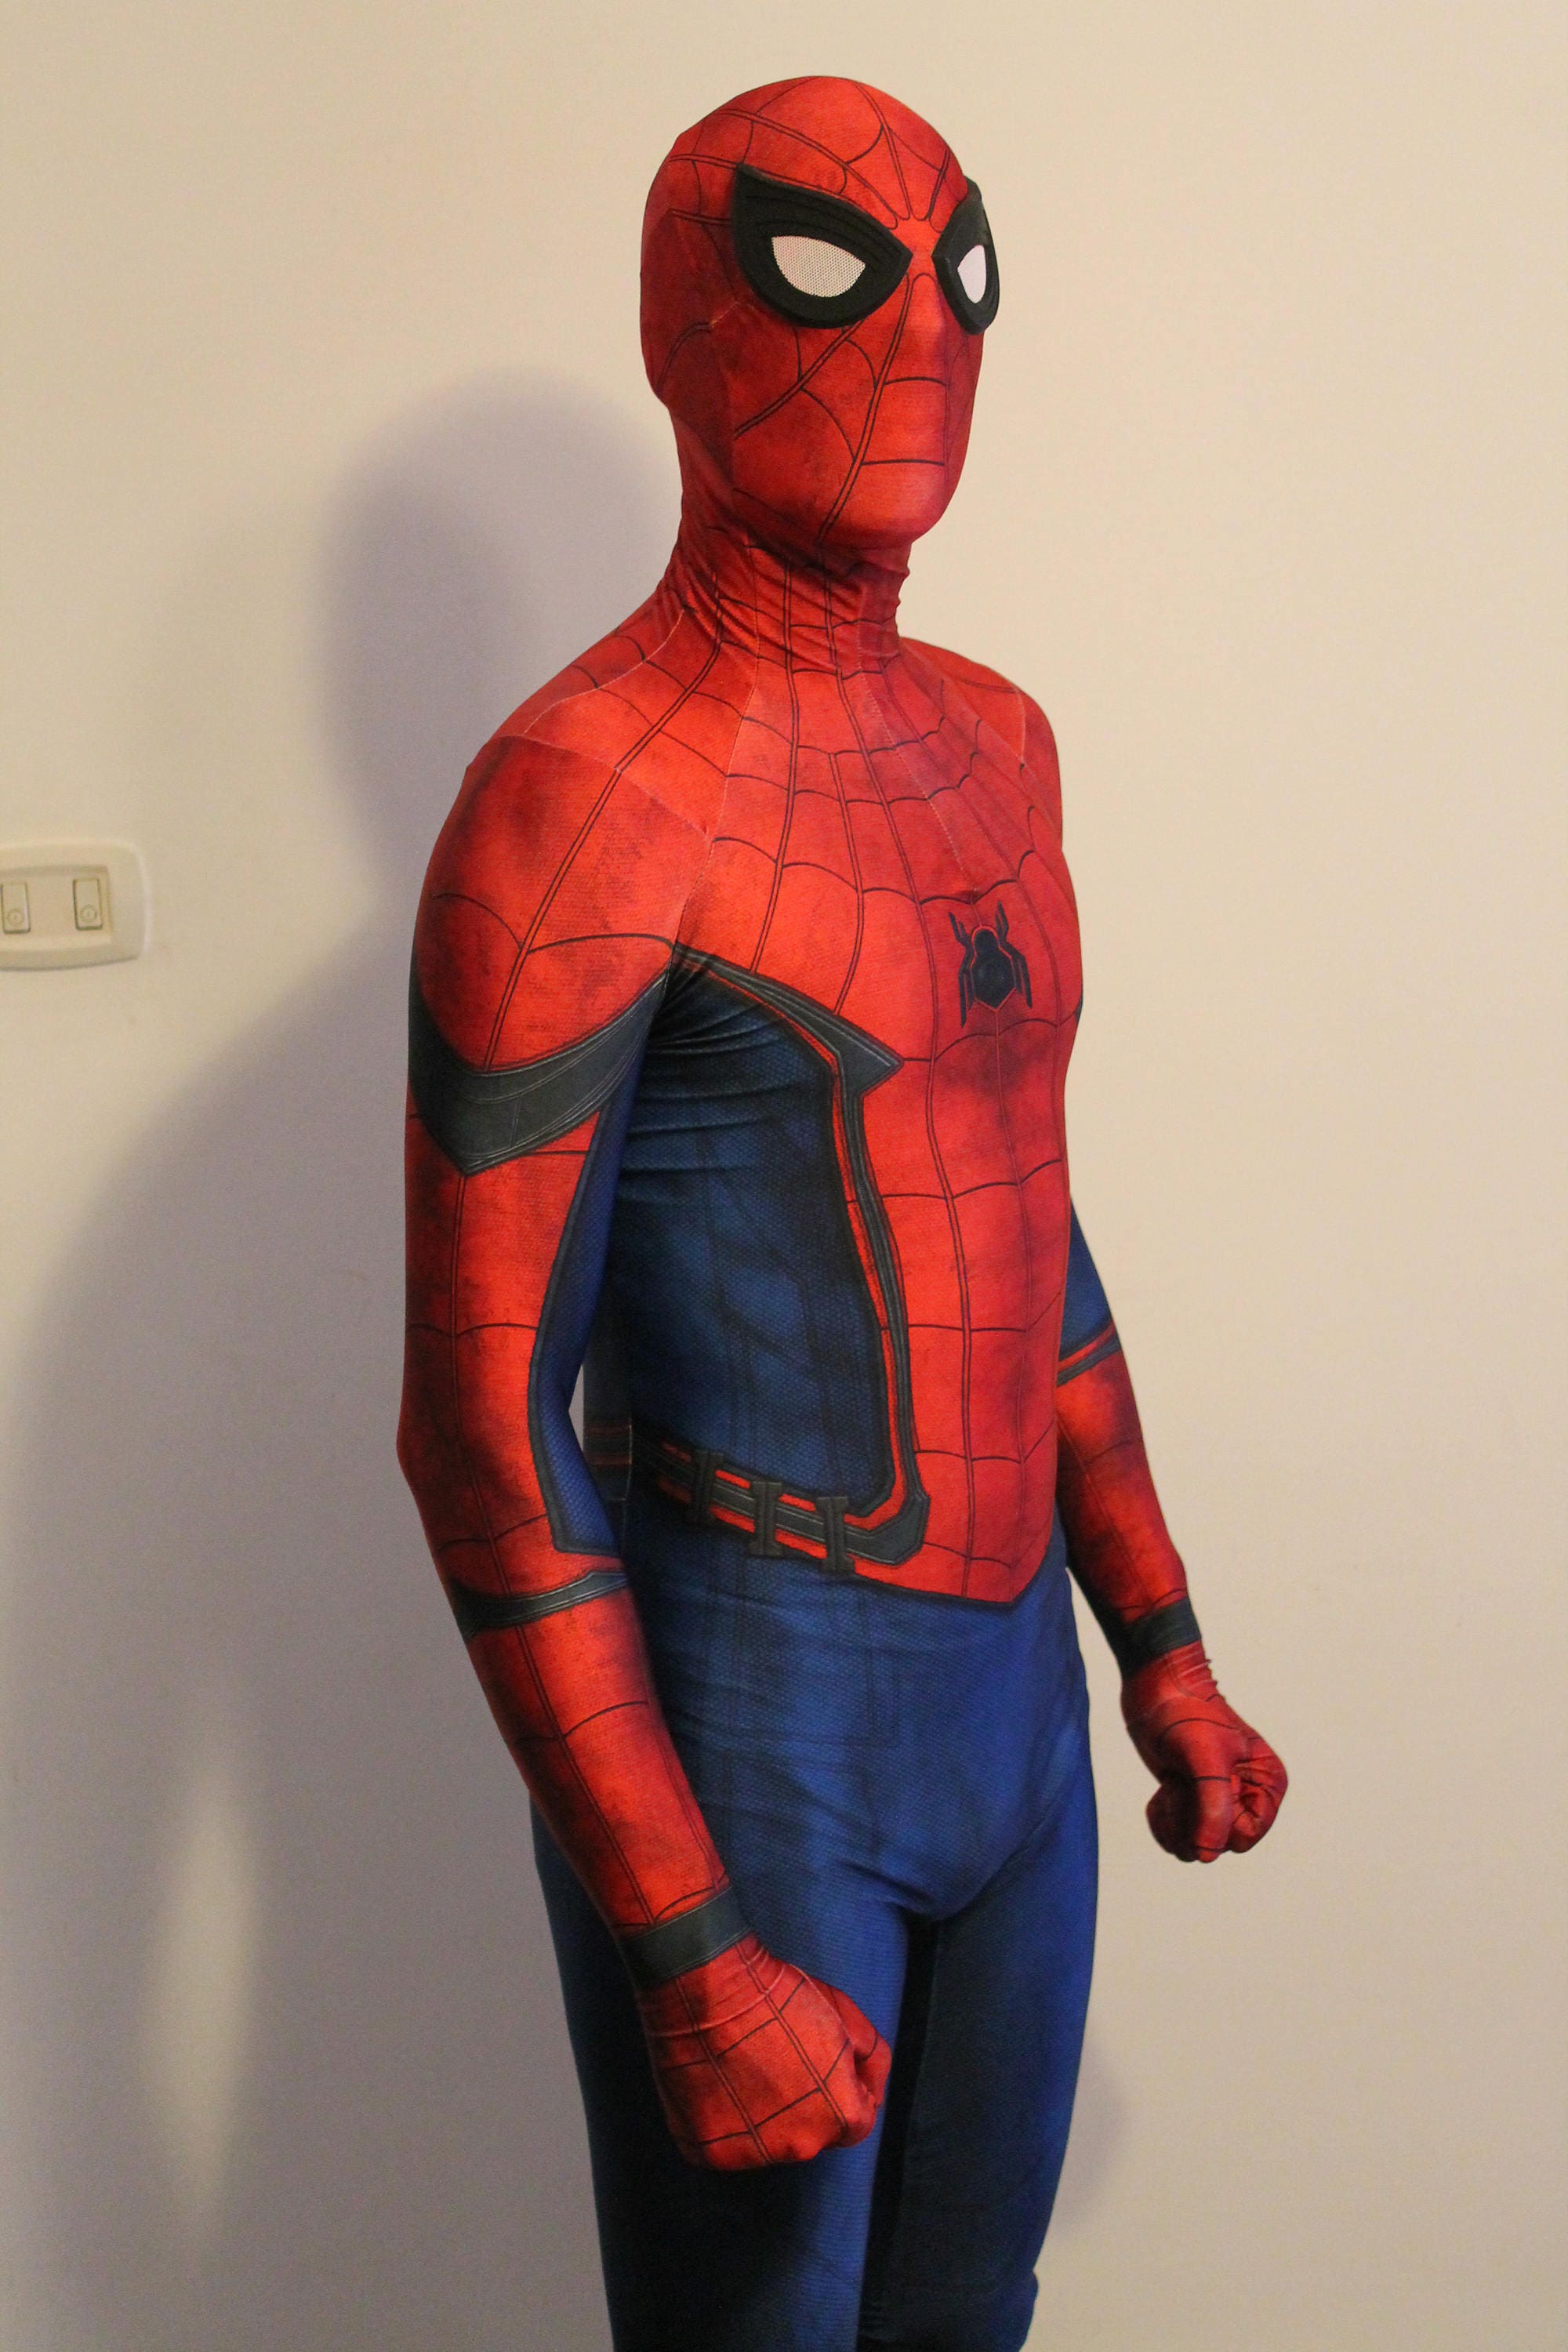 Replica Spiderman costume ' Homecoming ' printed on